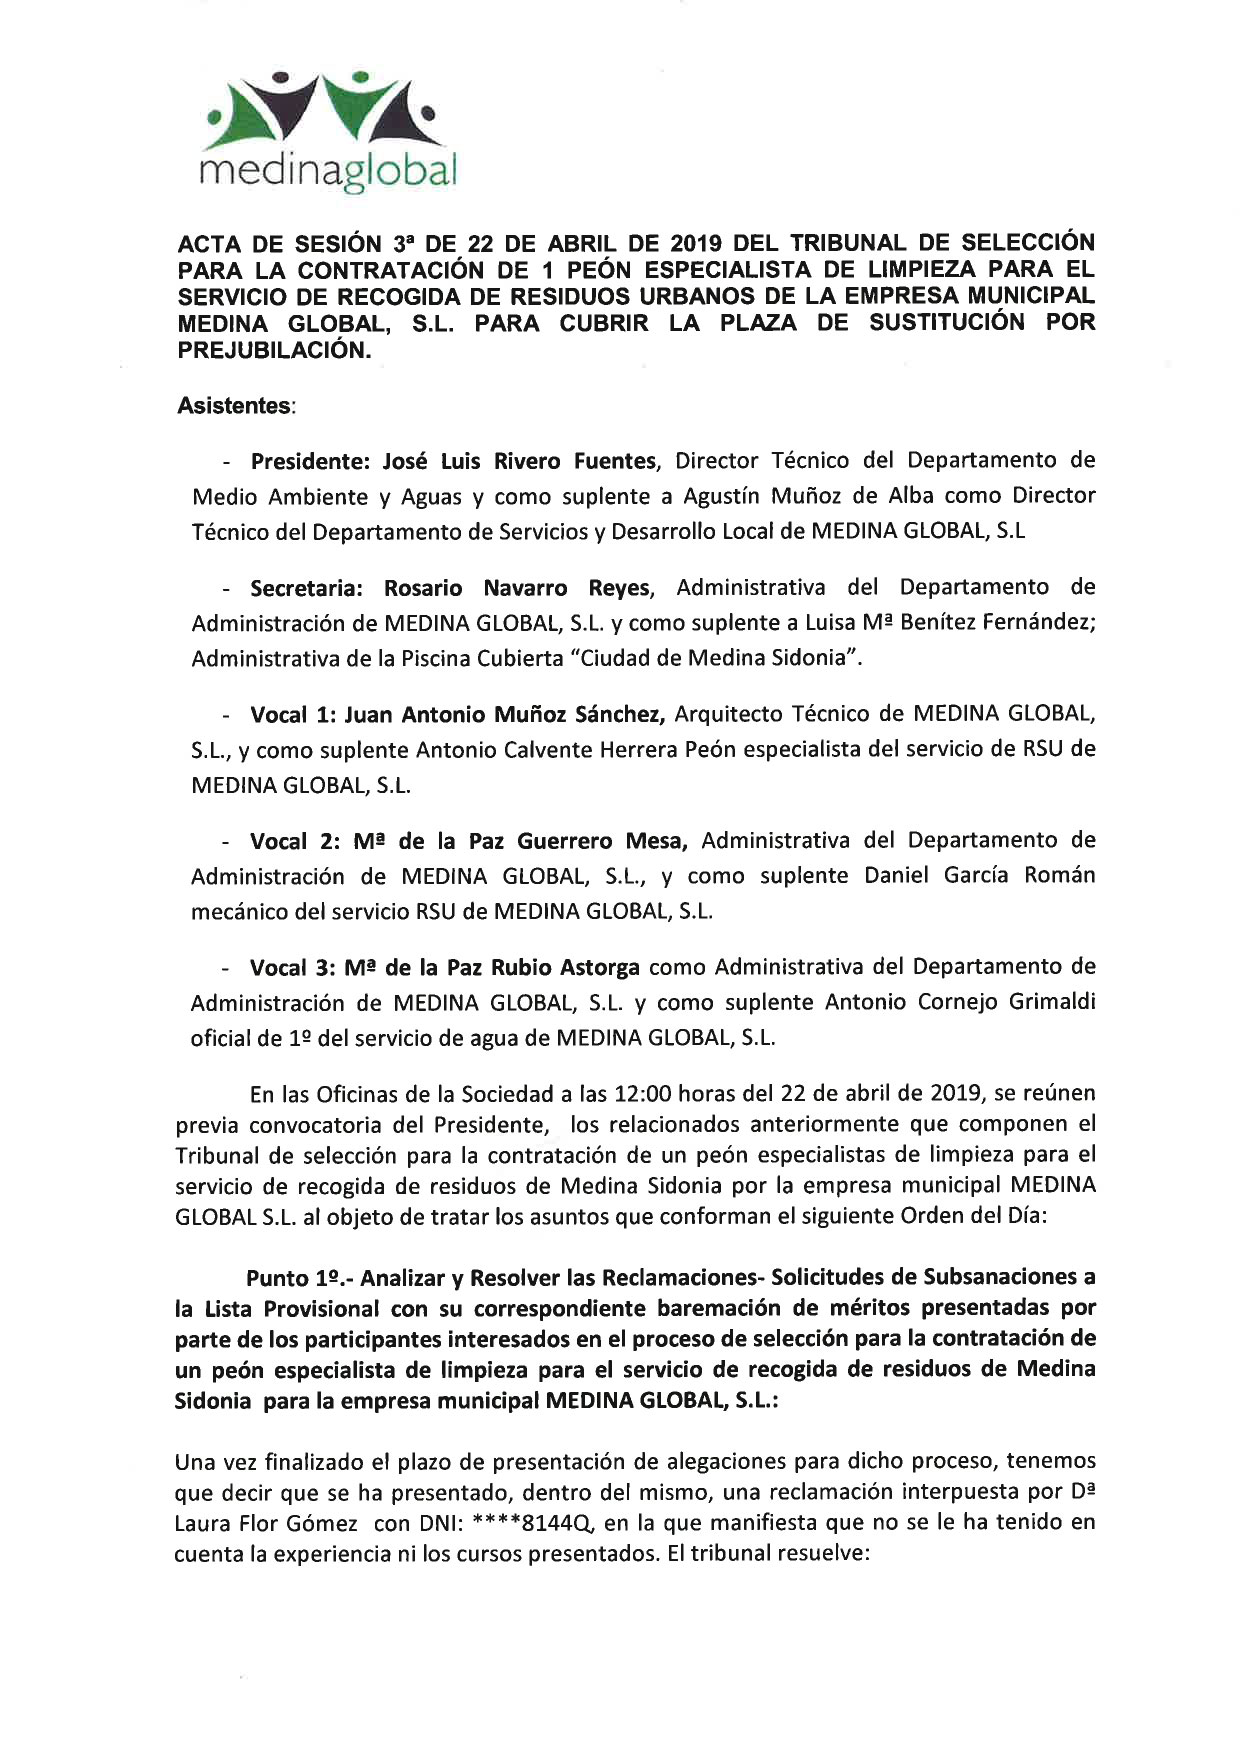 ACTA 3ª MESA DE VALORACION LISTA BAREAMCION DEFINITIVA PEON LIMPIEZA MARZO 2019 SUST PREJUBILACION-1